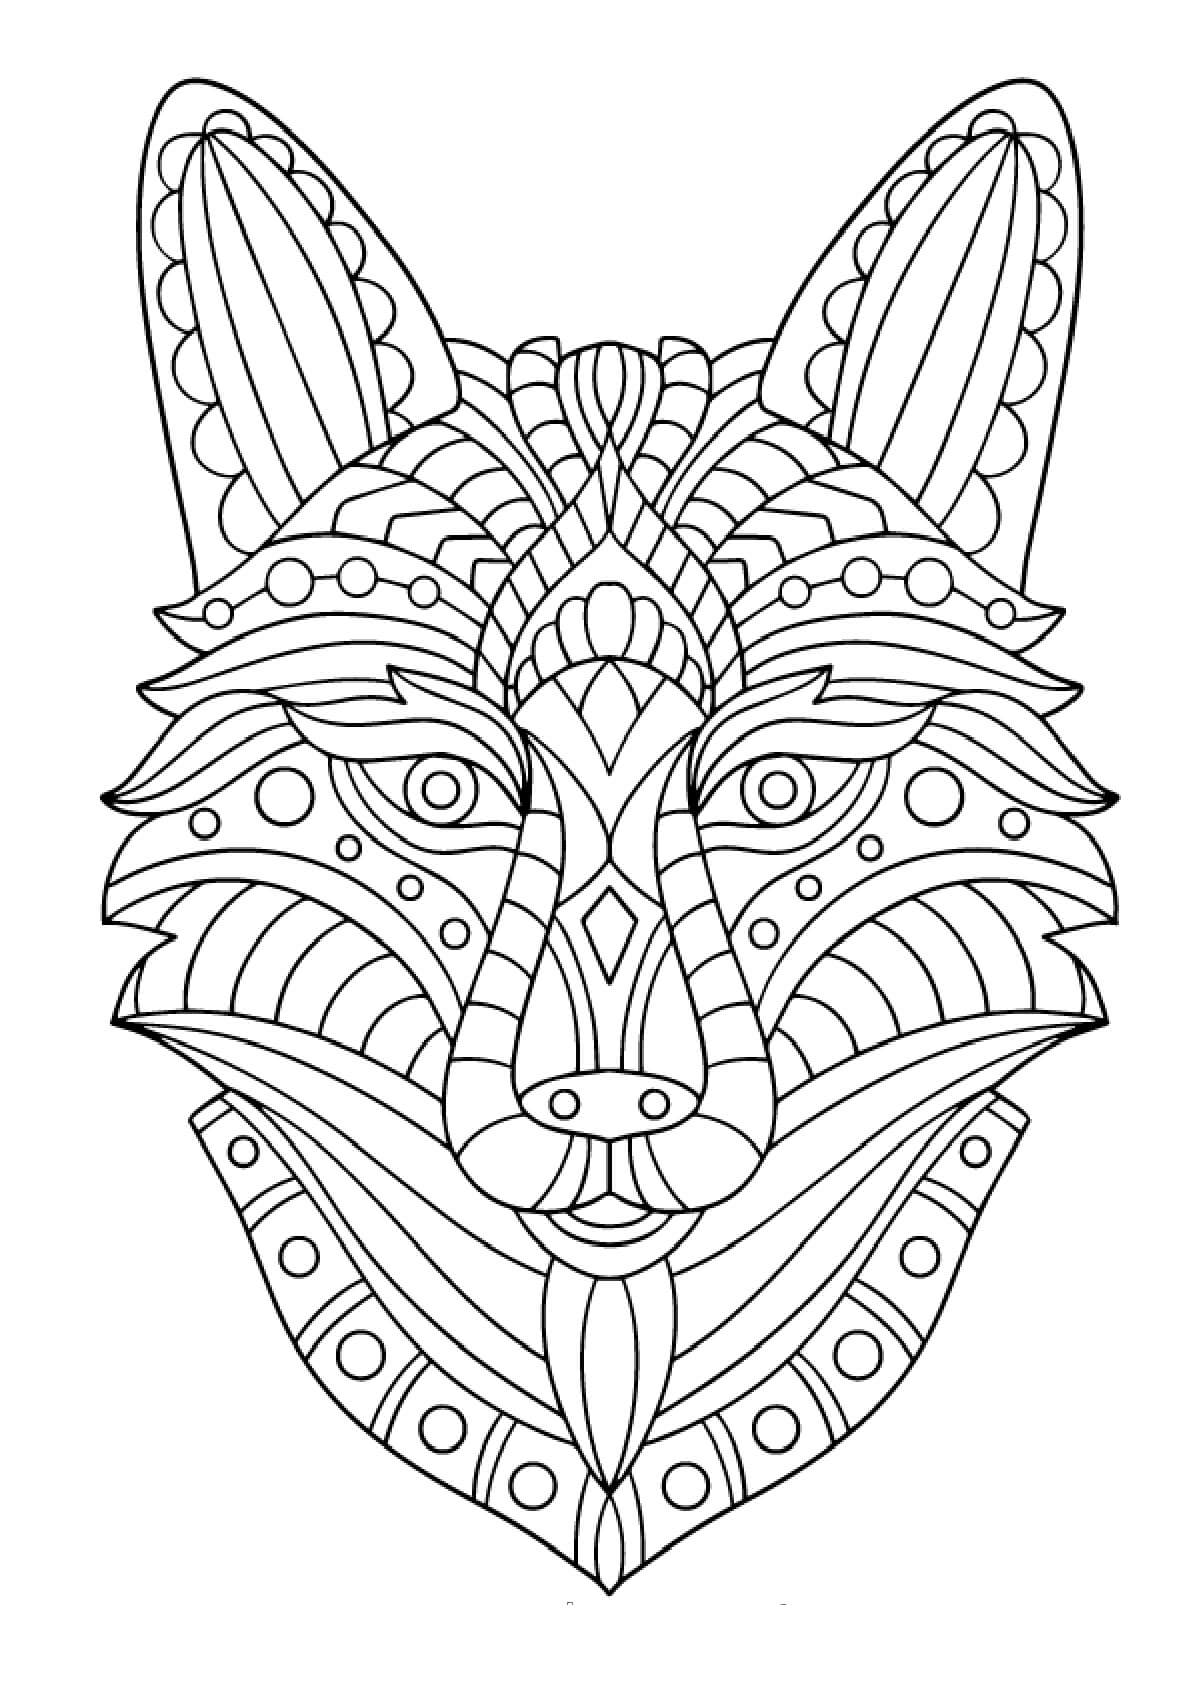 Mandala Wolf Coloring Page – Sheet 2 Mandala